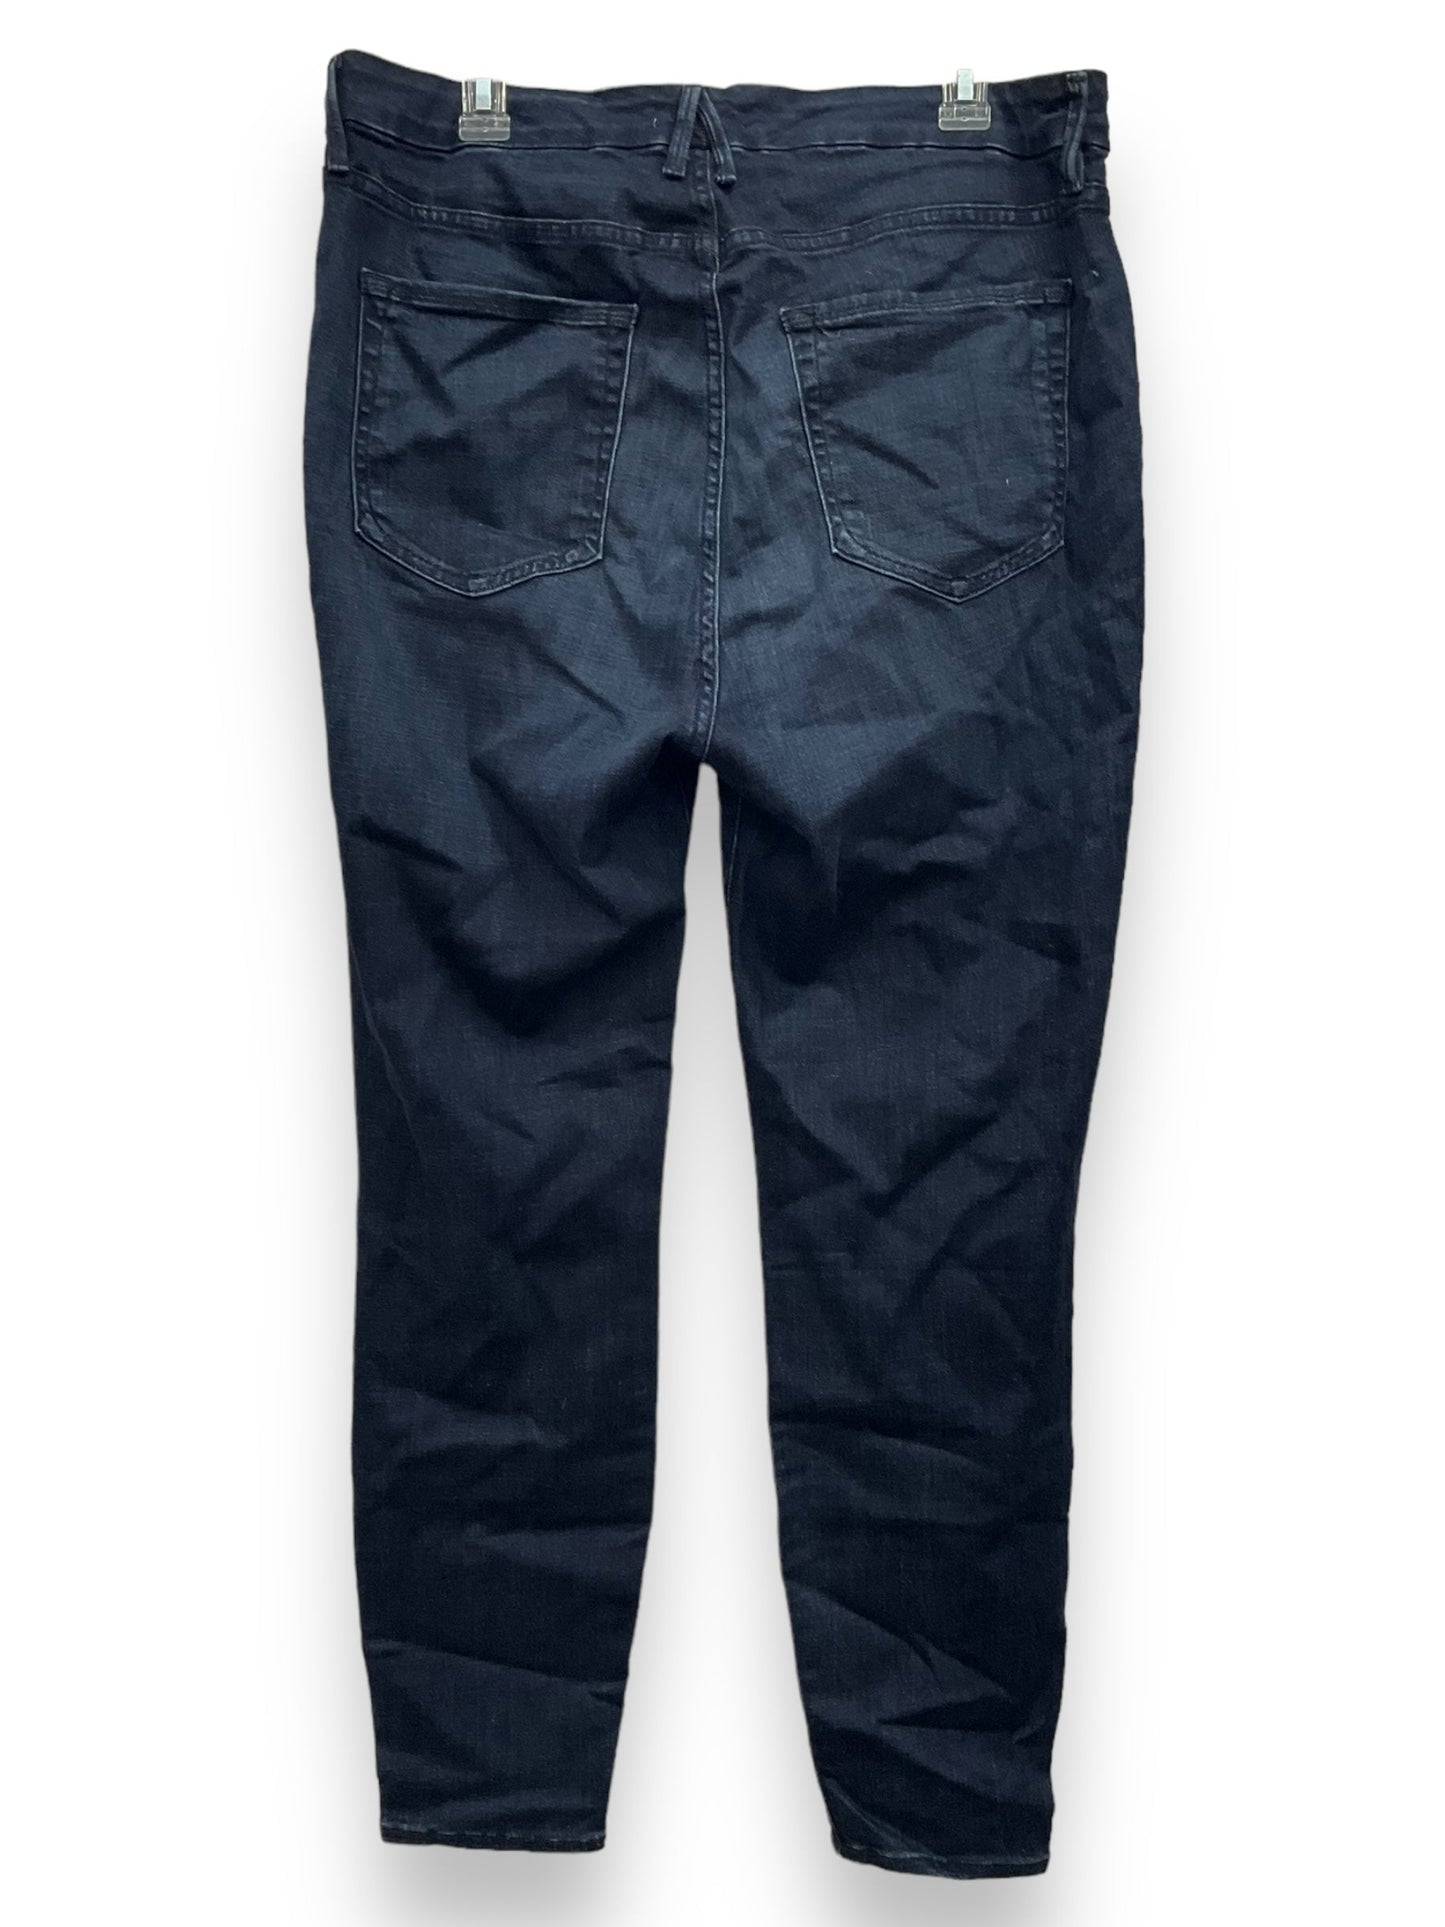 Blue Denim Jeans Cropped Good American, Size 18w